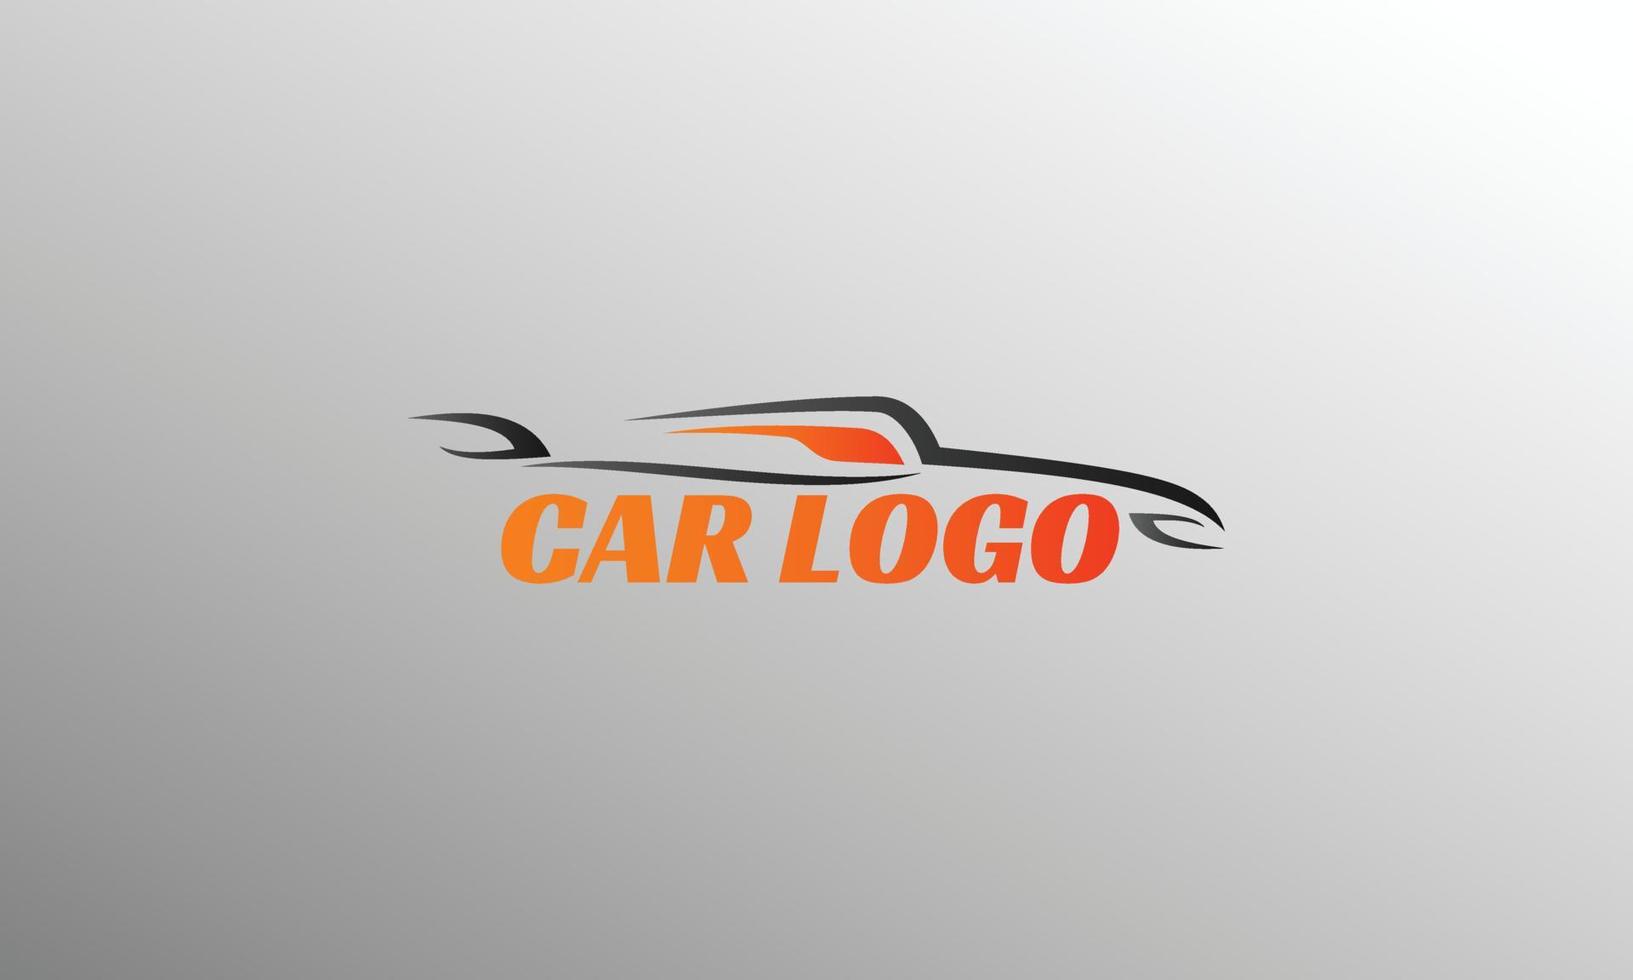 car line logo template for garage or community vector